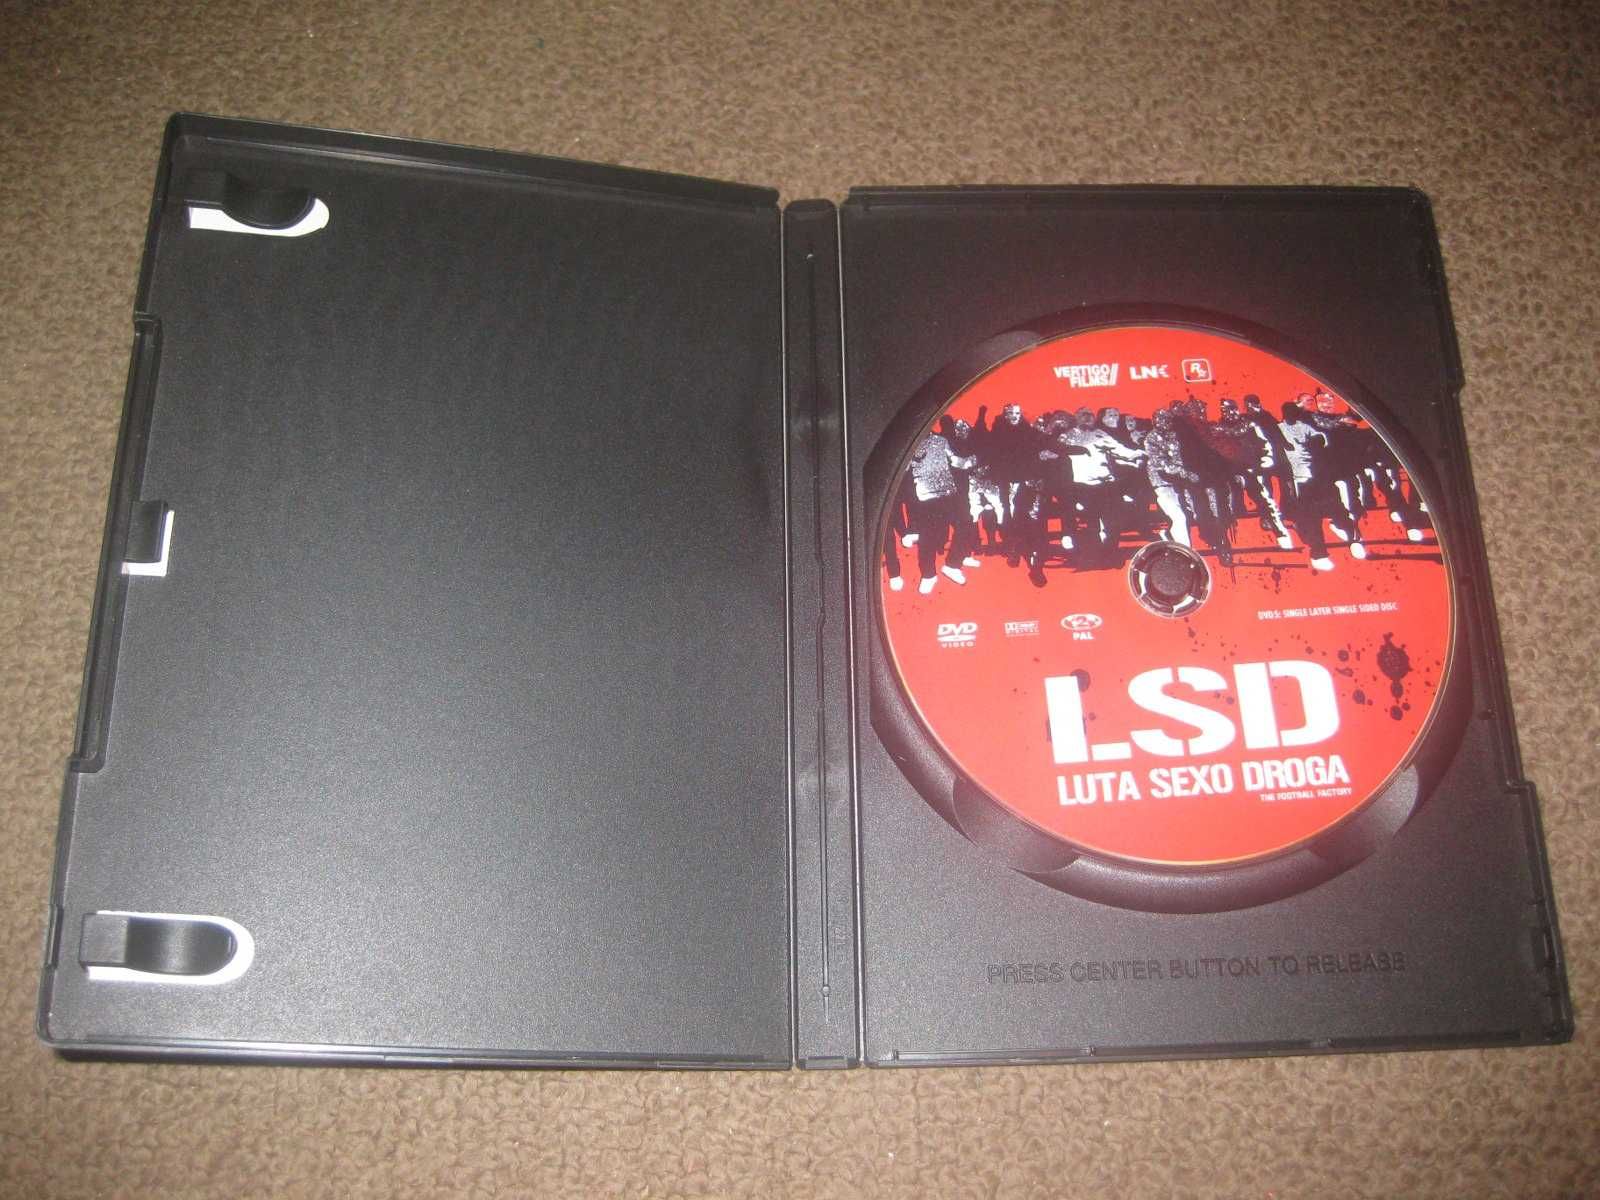 DVD "LSD- Luta, Sexo, Droga" de Nick Love/Raro!